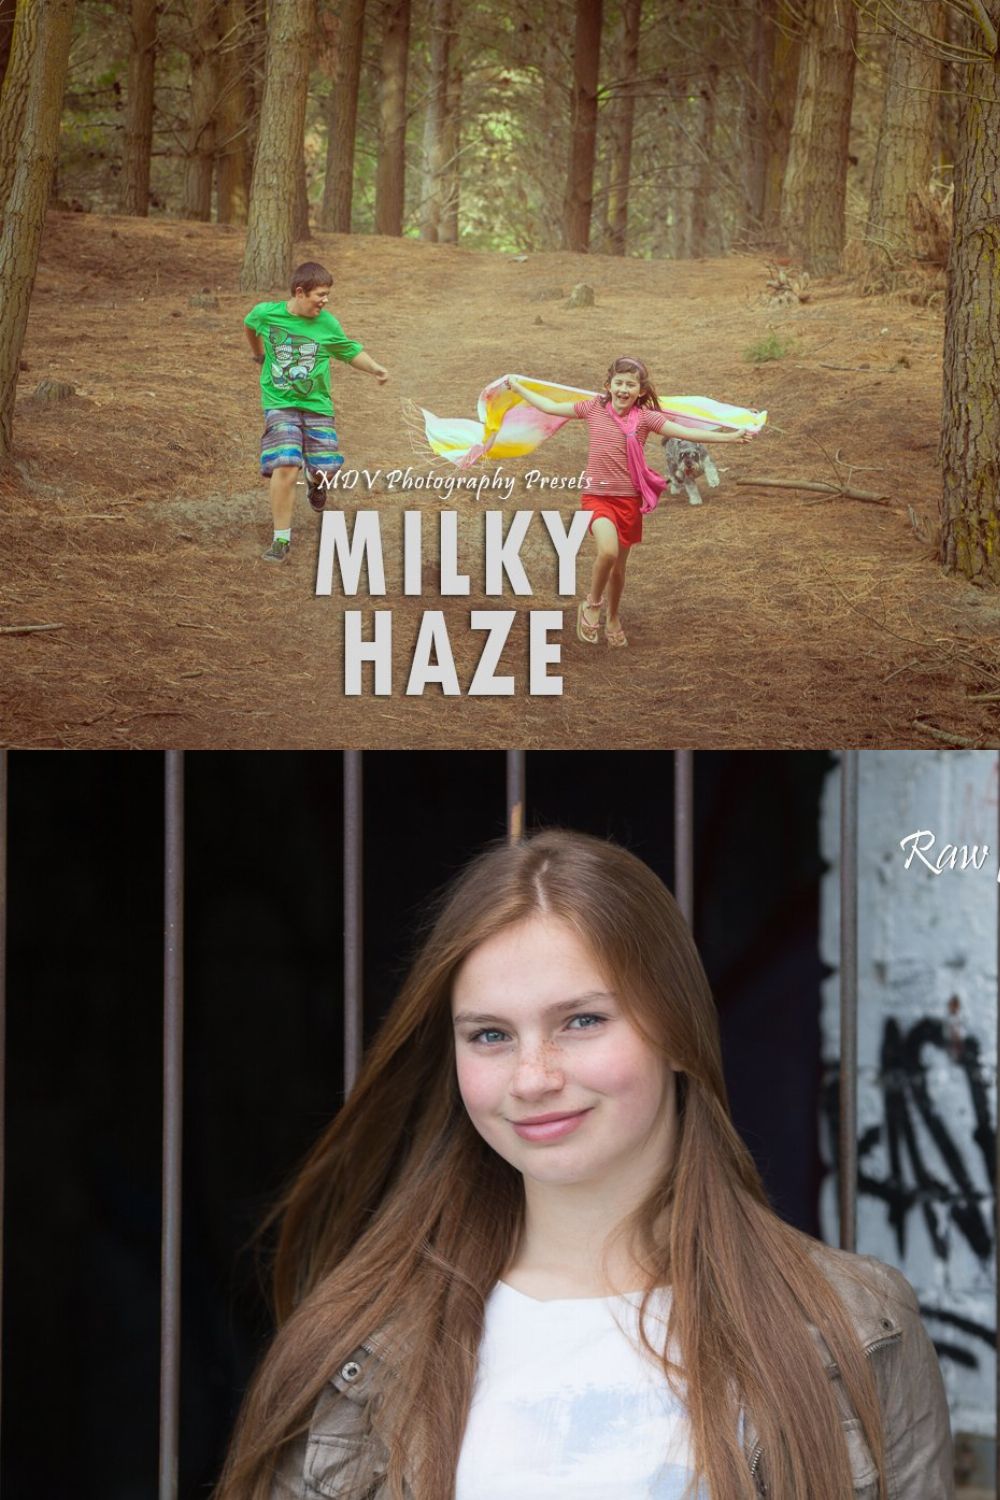 Milky Haze - Lightroom presets pinterest preview image.